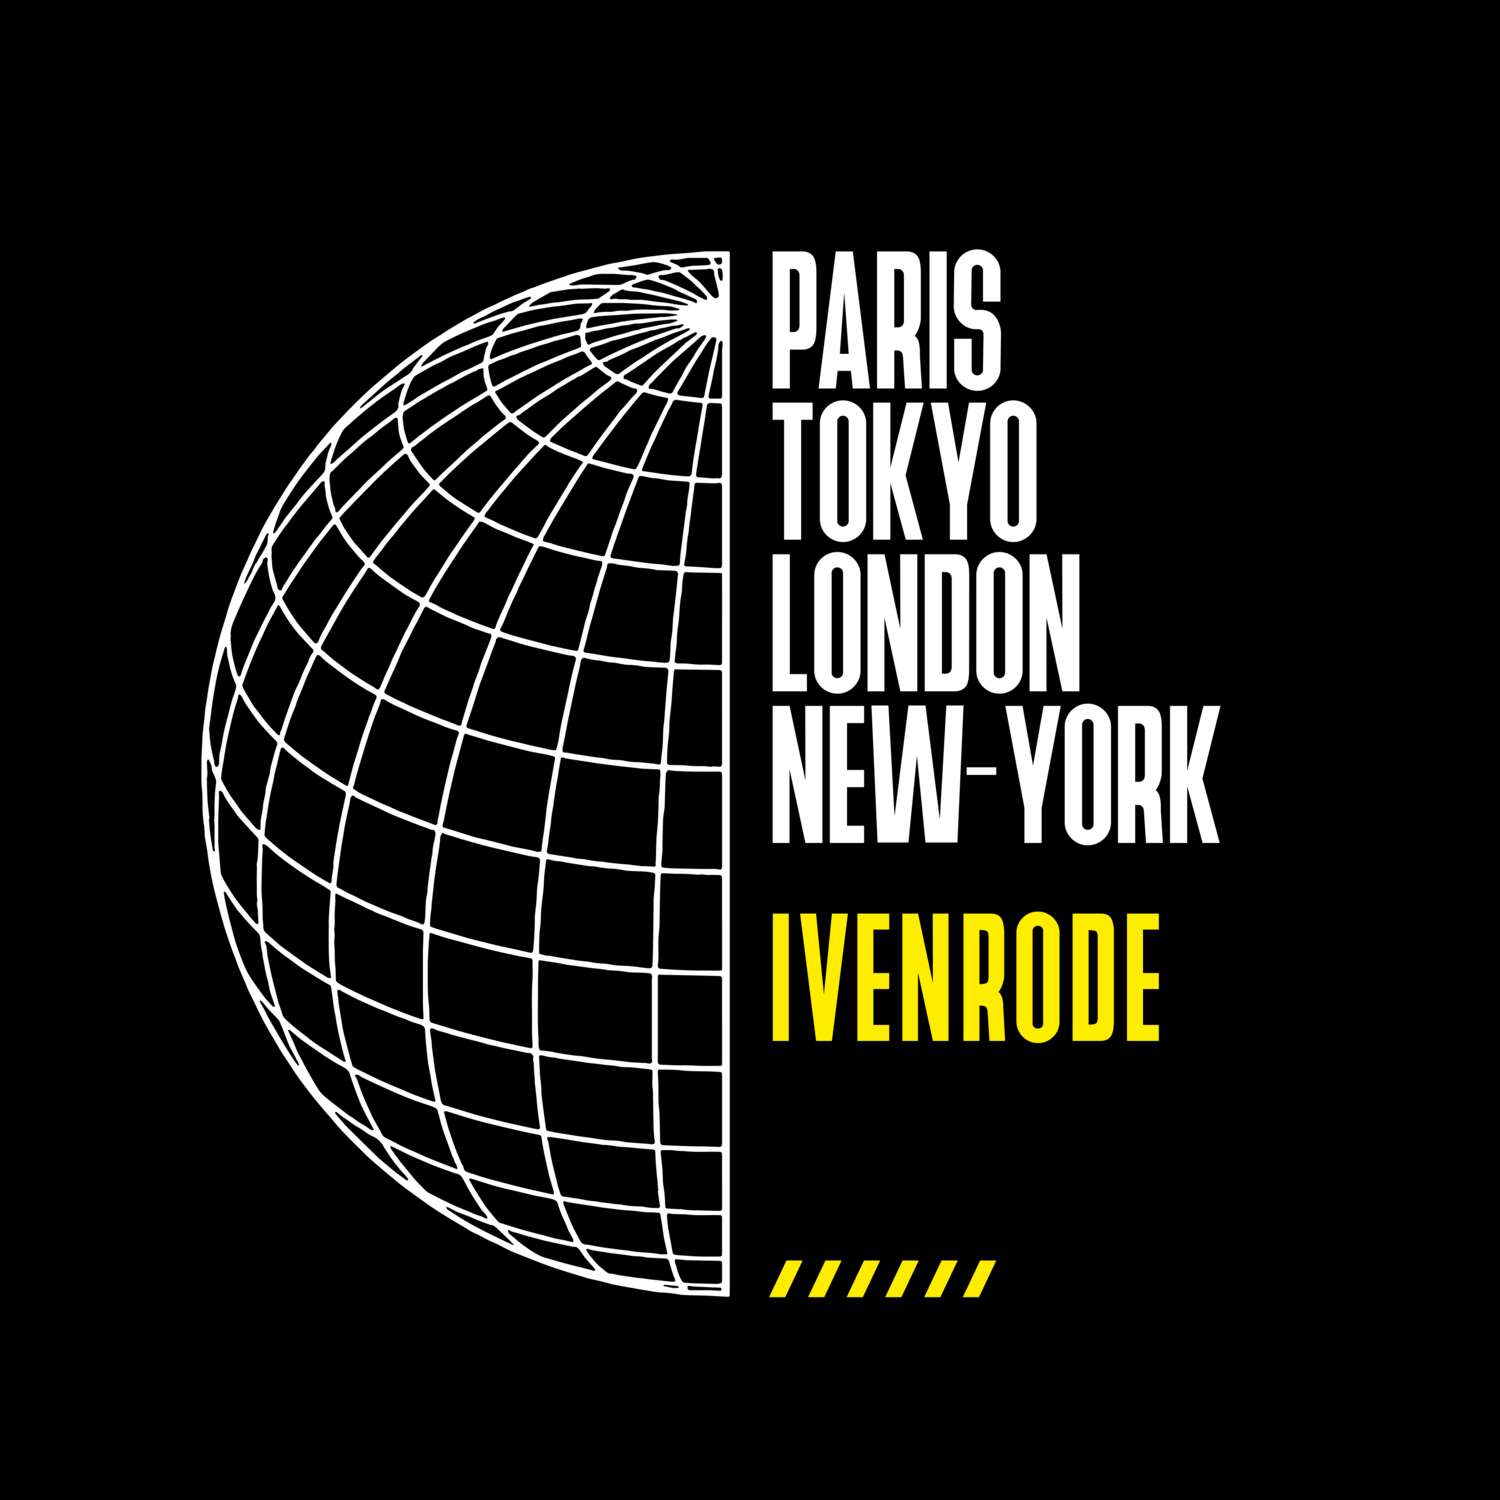 Ivenrode T-Shirt »Paris Tokyo London«